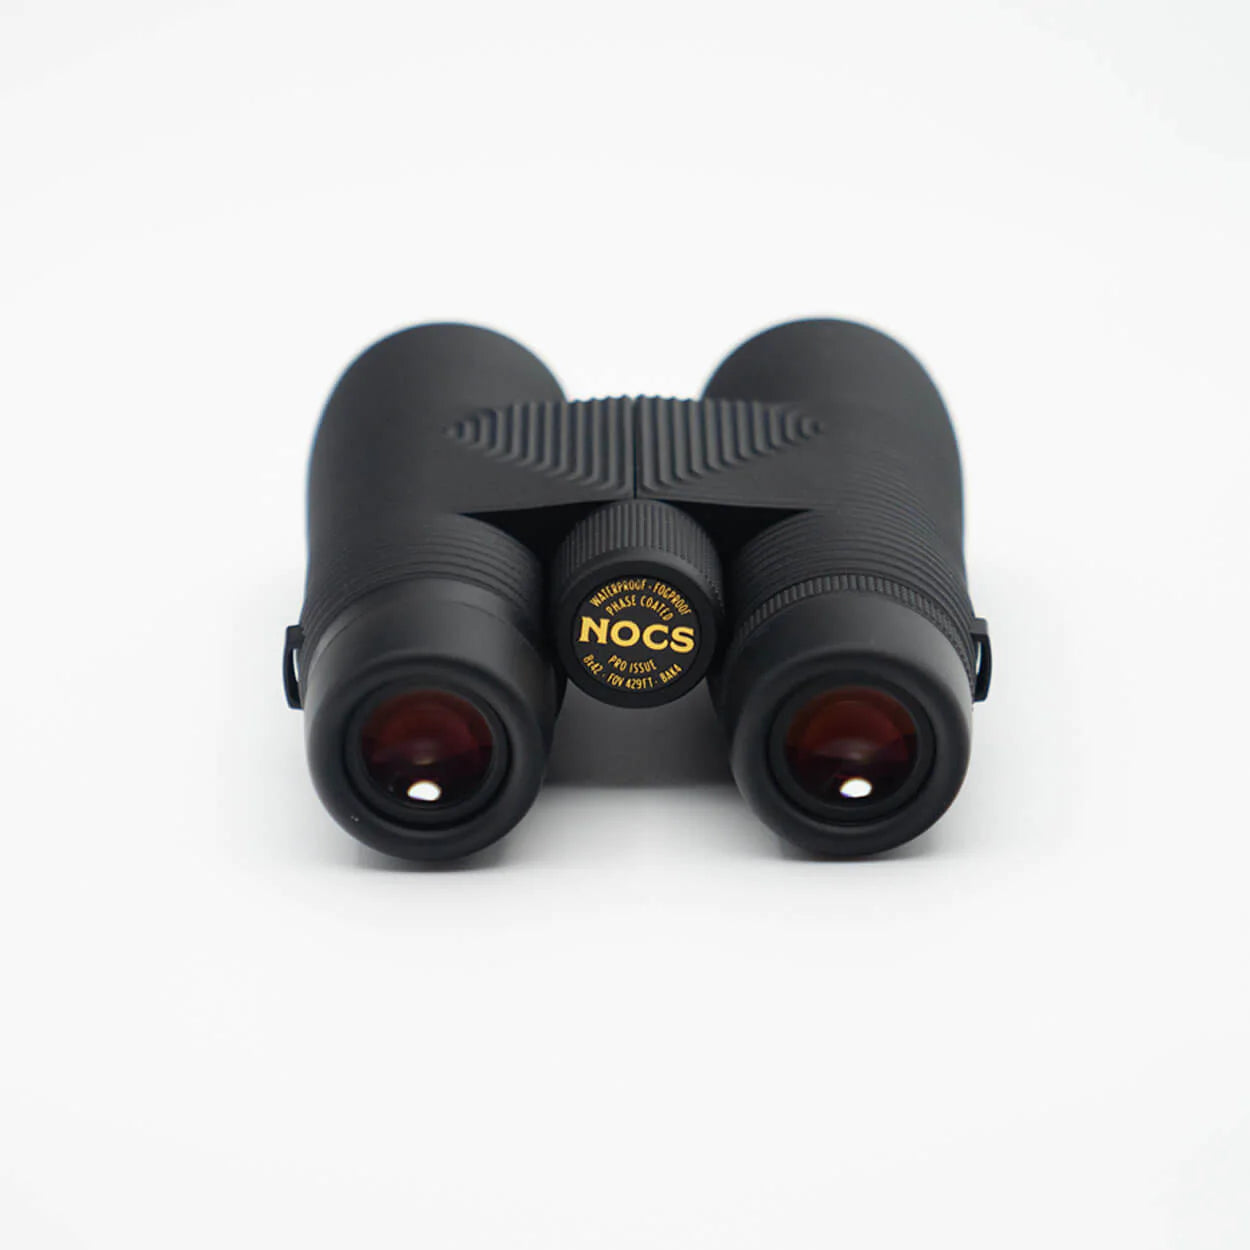 Pro Issue Waterproof Binoculars